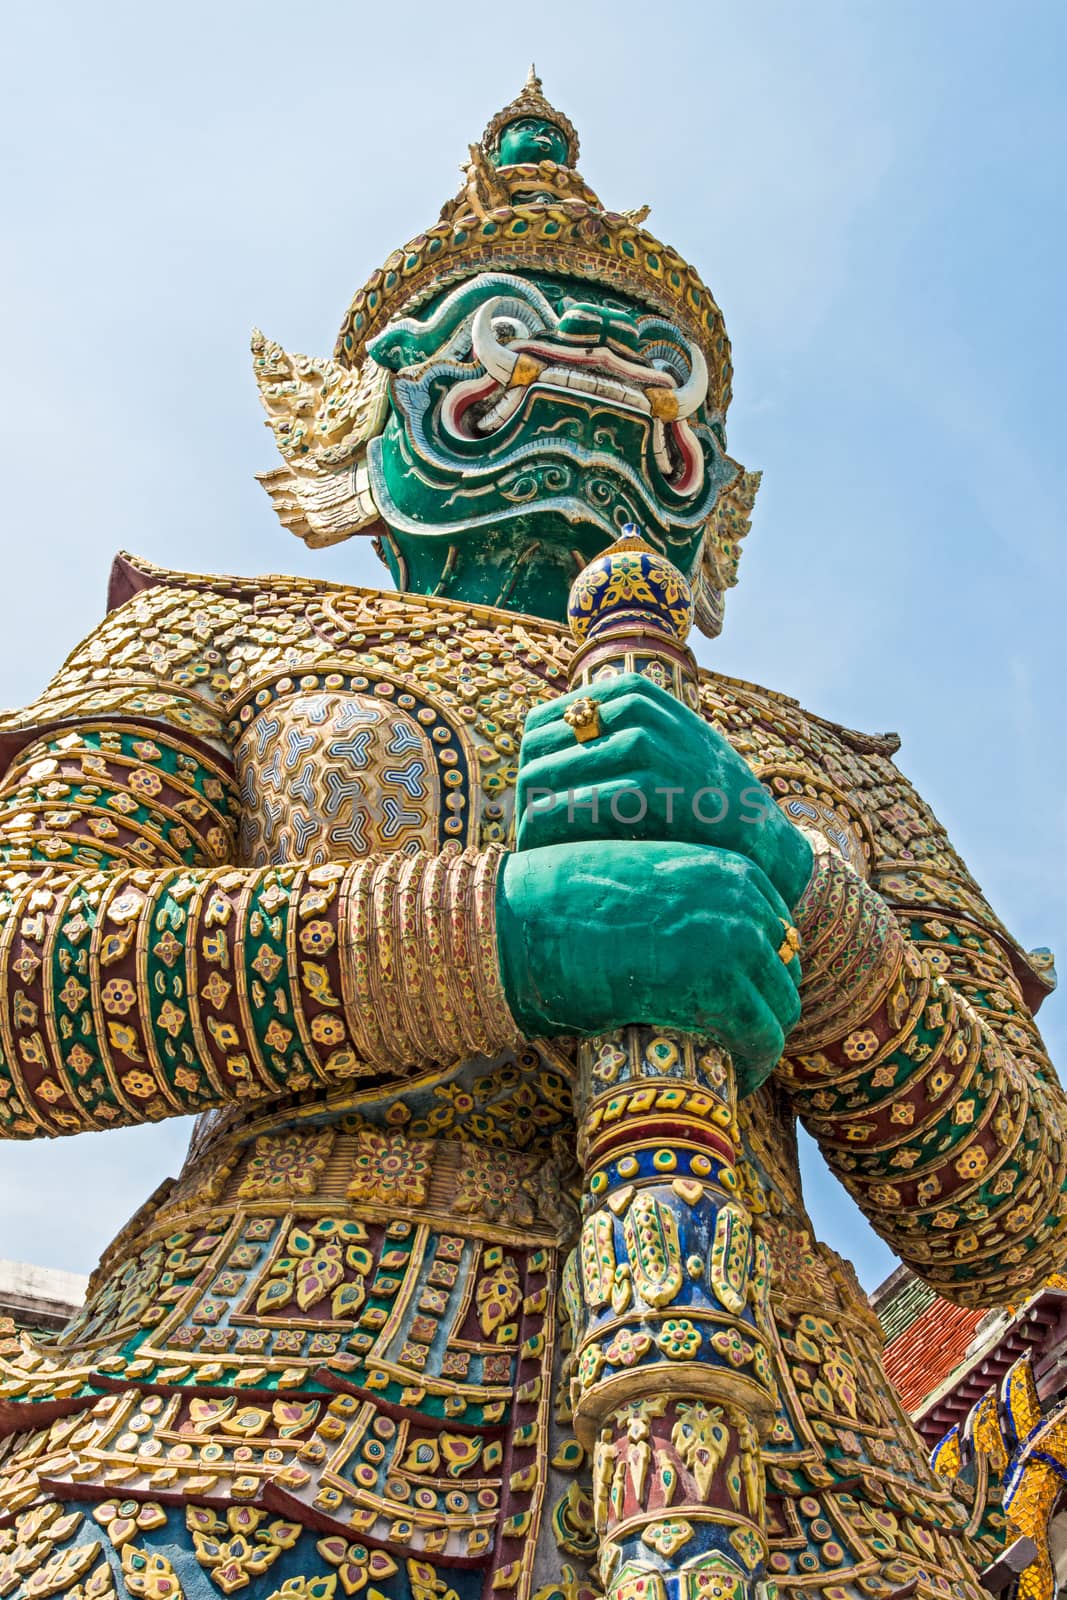 Demon Guardian at Wat Phra Kaew, Bangkok, Thailand. by kannapon